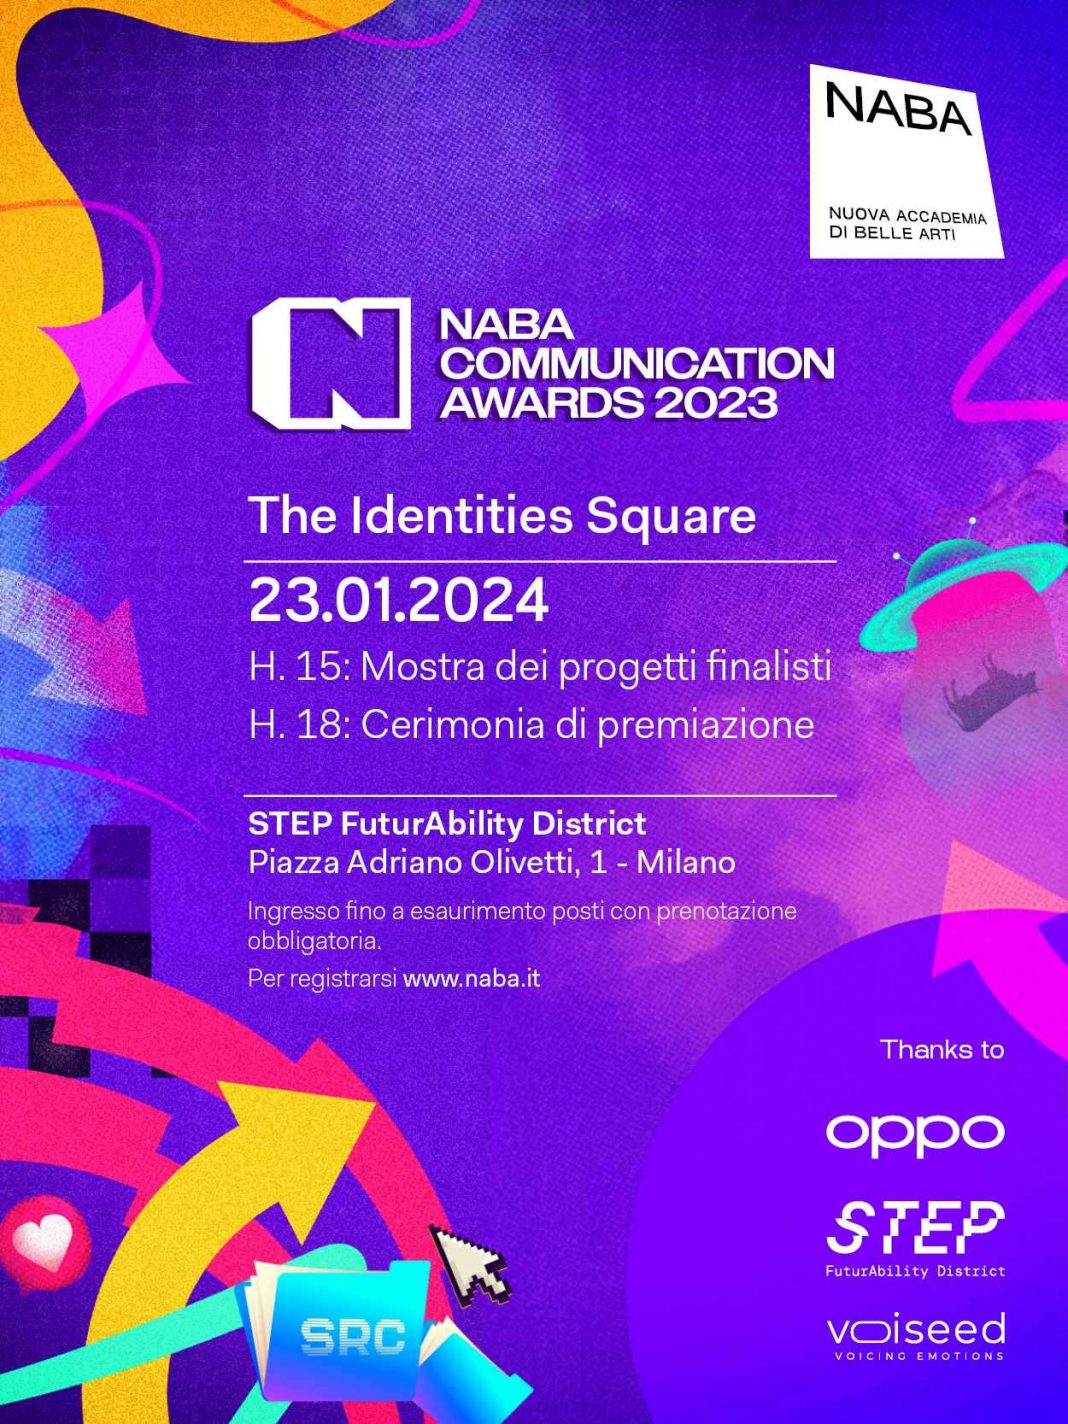 NABA Communication Awards – The Identities Squarehttps://www.exibart.com/repository/media/formidable/11/img/7be/NABA_NCA23-1068x1424.jpg